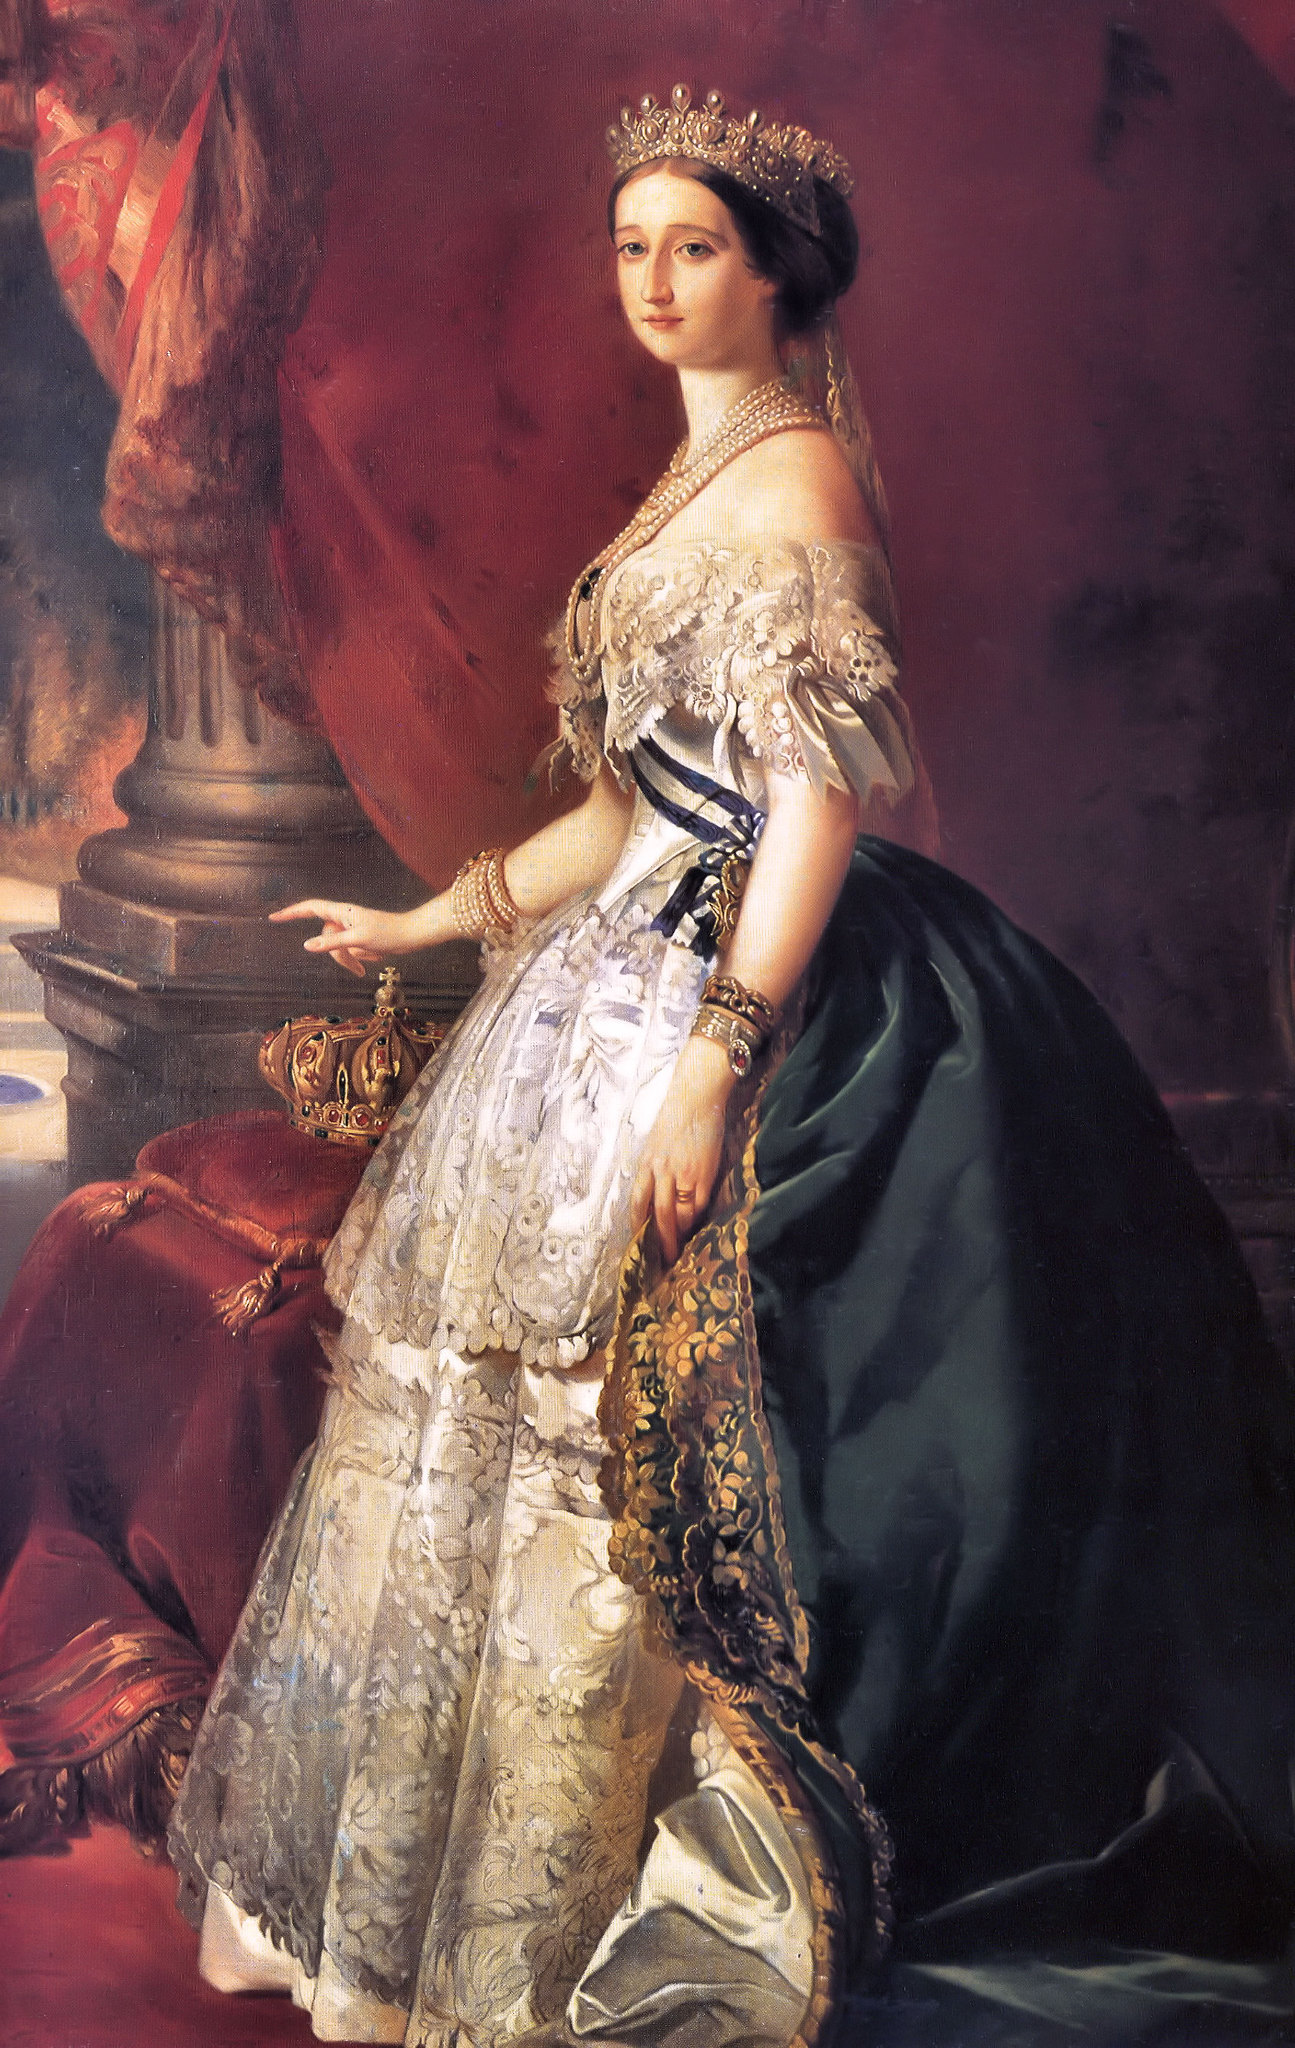 Portrait of the Empress Eugénie (1826-1920) by Franz Xaver Winterhalder, 1853, wearing a gown designed by Worth